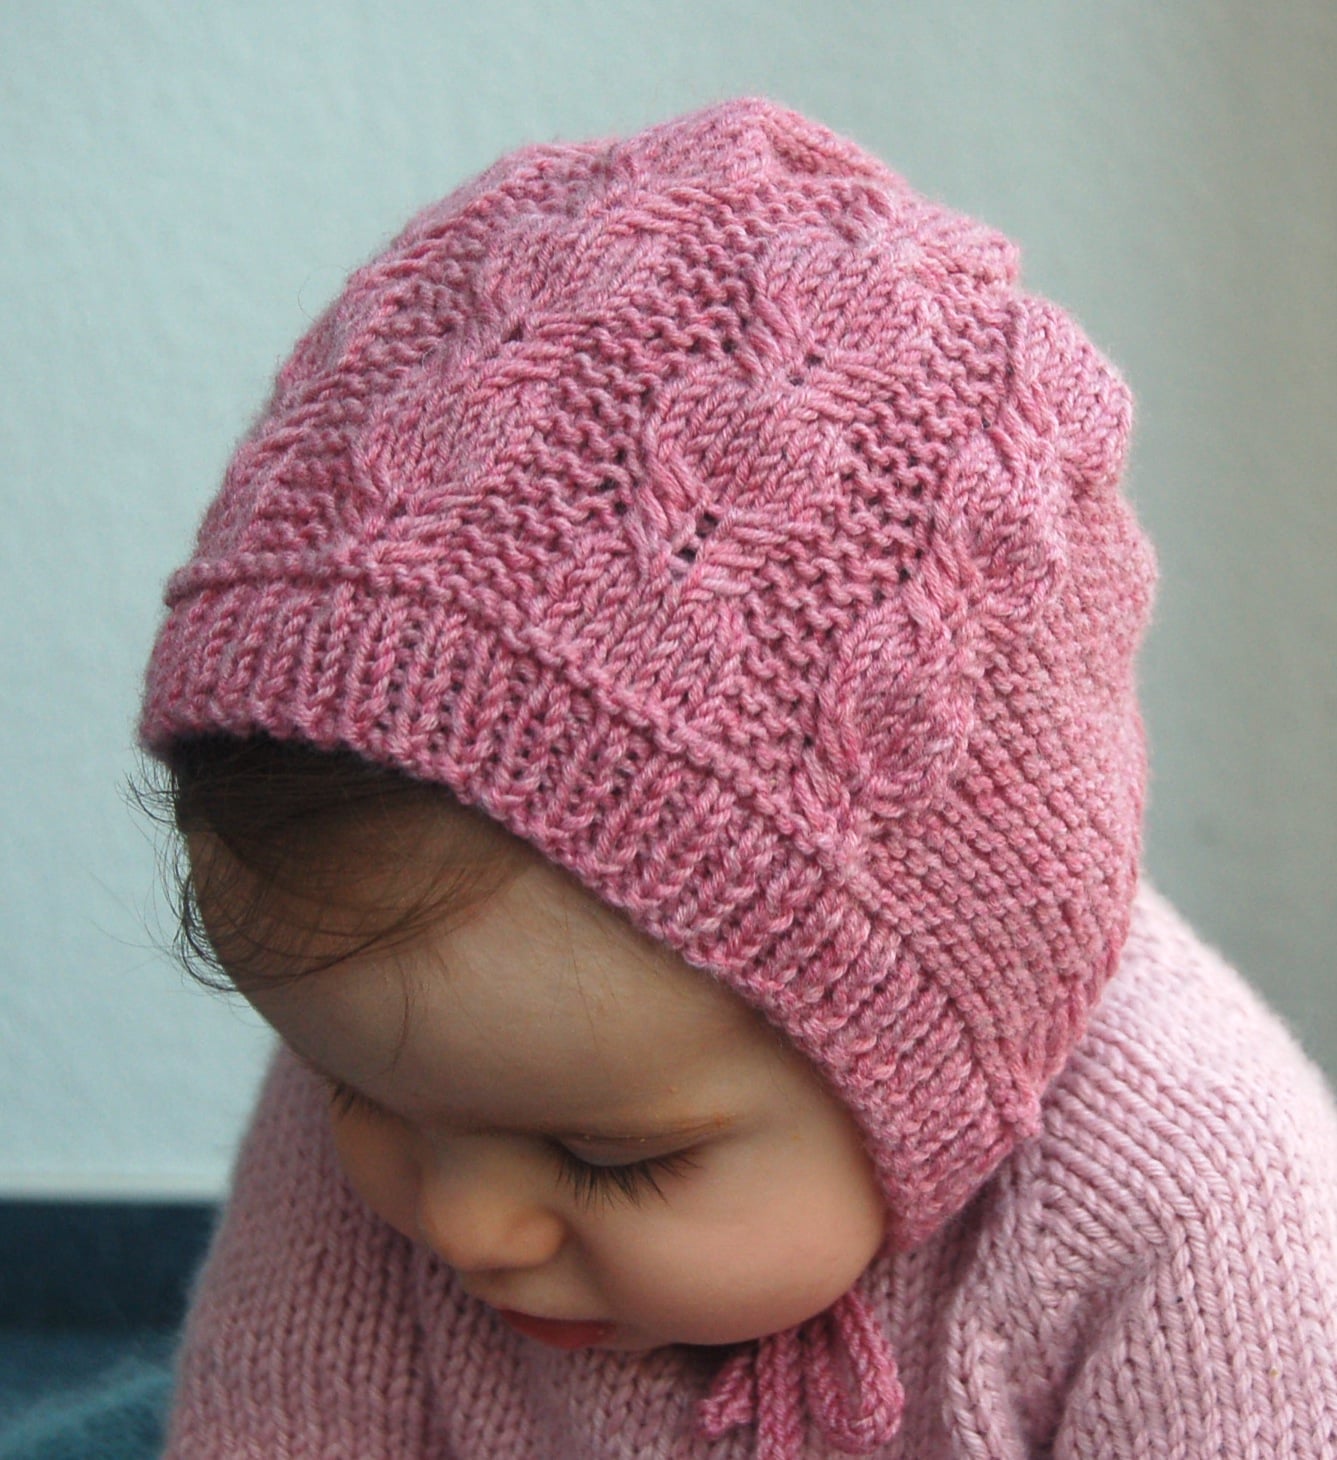 Silverfox Bonnet knitting pattern by Lisa Chemery - Frogginette Knitting Patterns